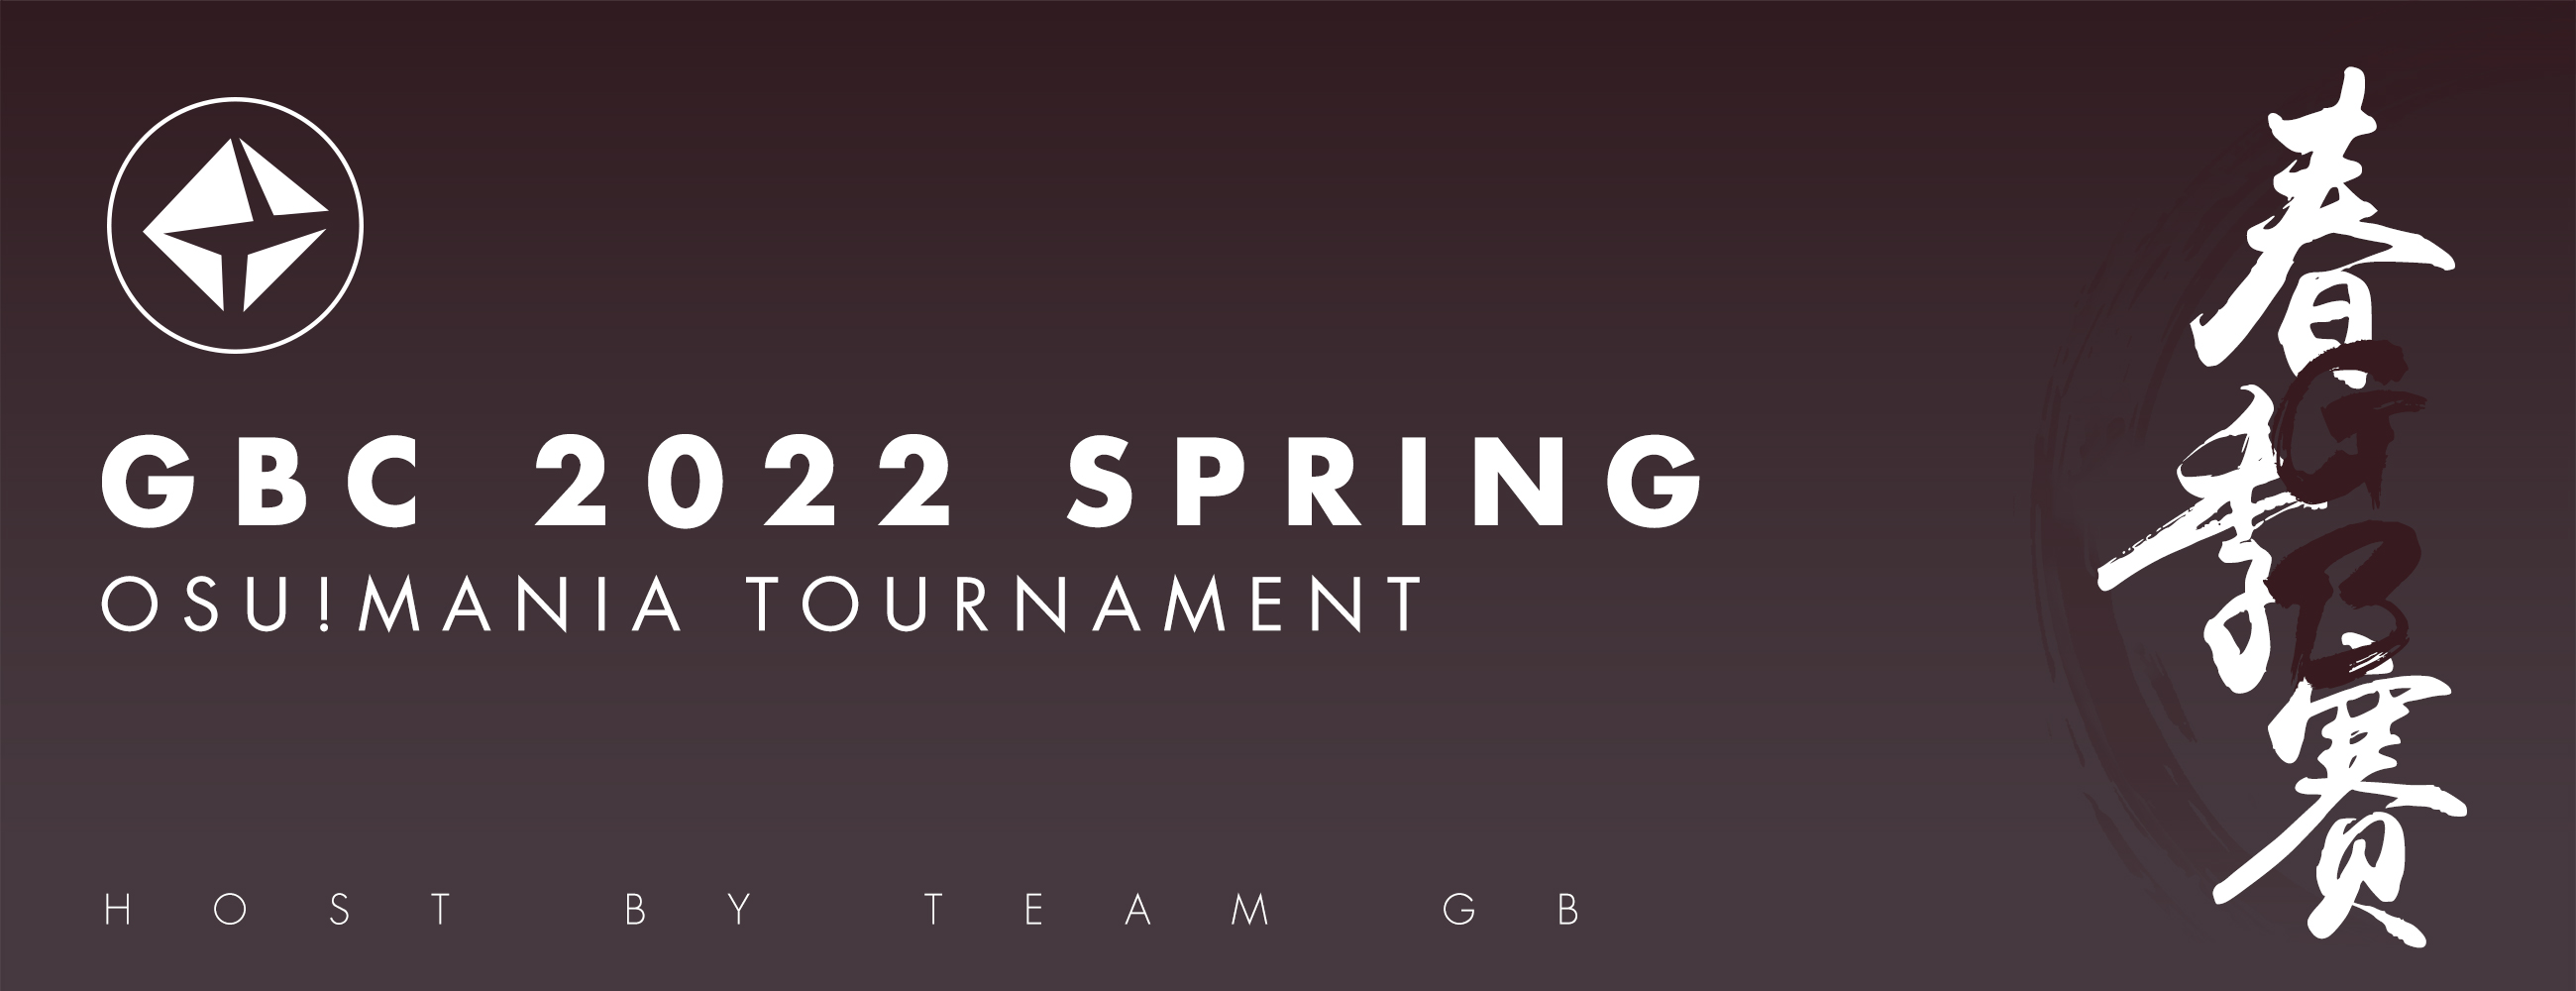 GBC 2022 Spring banner